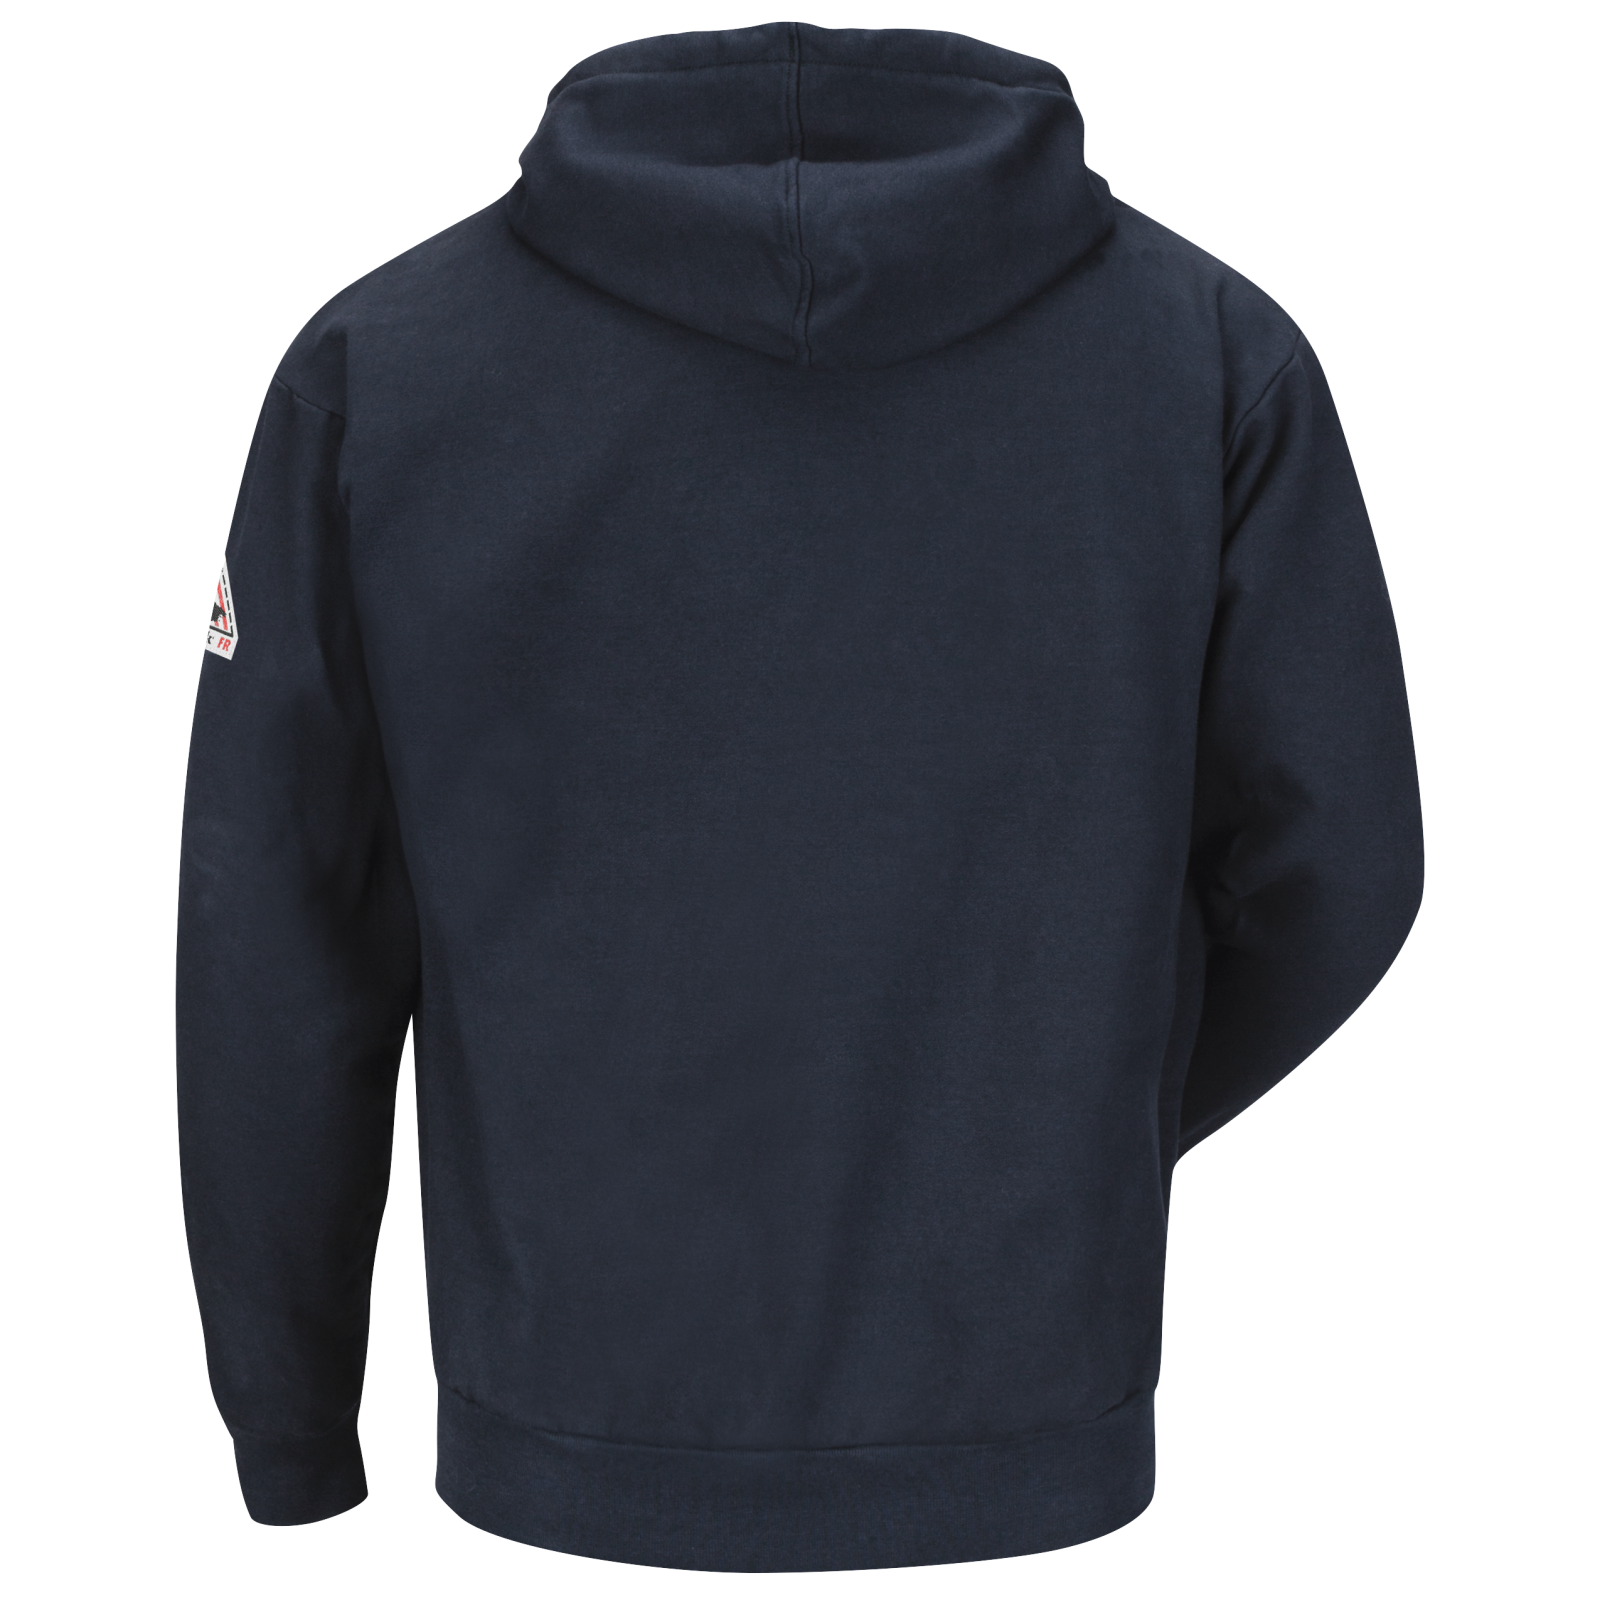 Bulwark Men's Fleece Navy Fire-Resistant Pullover Hooded Sweatshirt from Columbia Safety